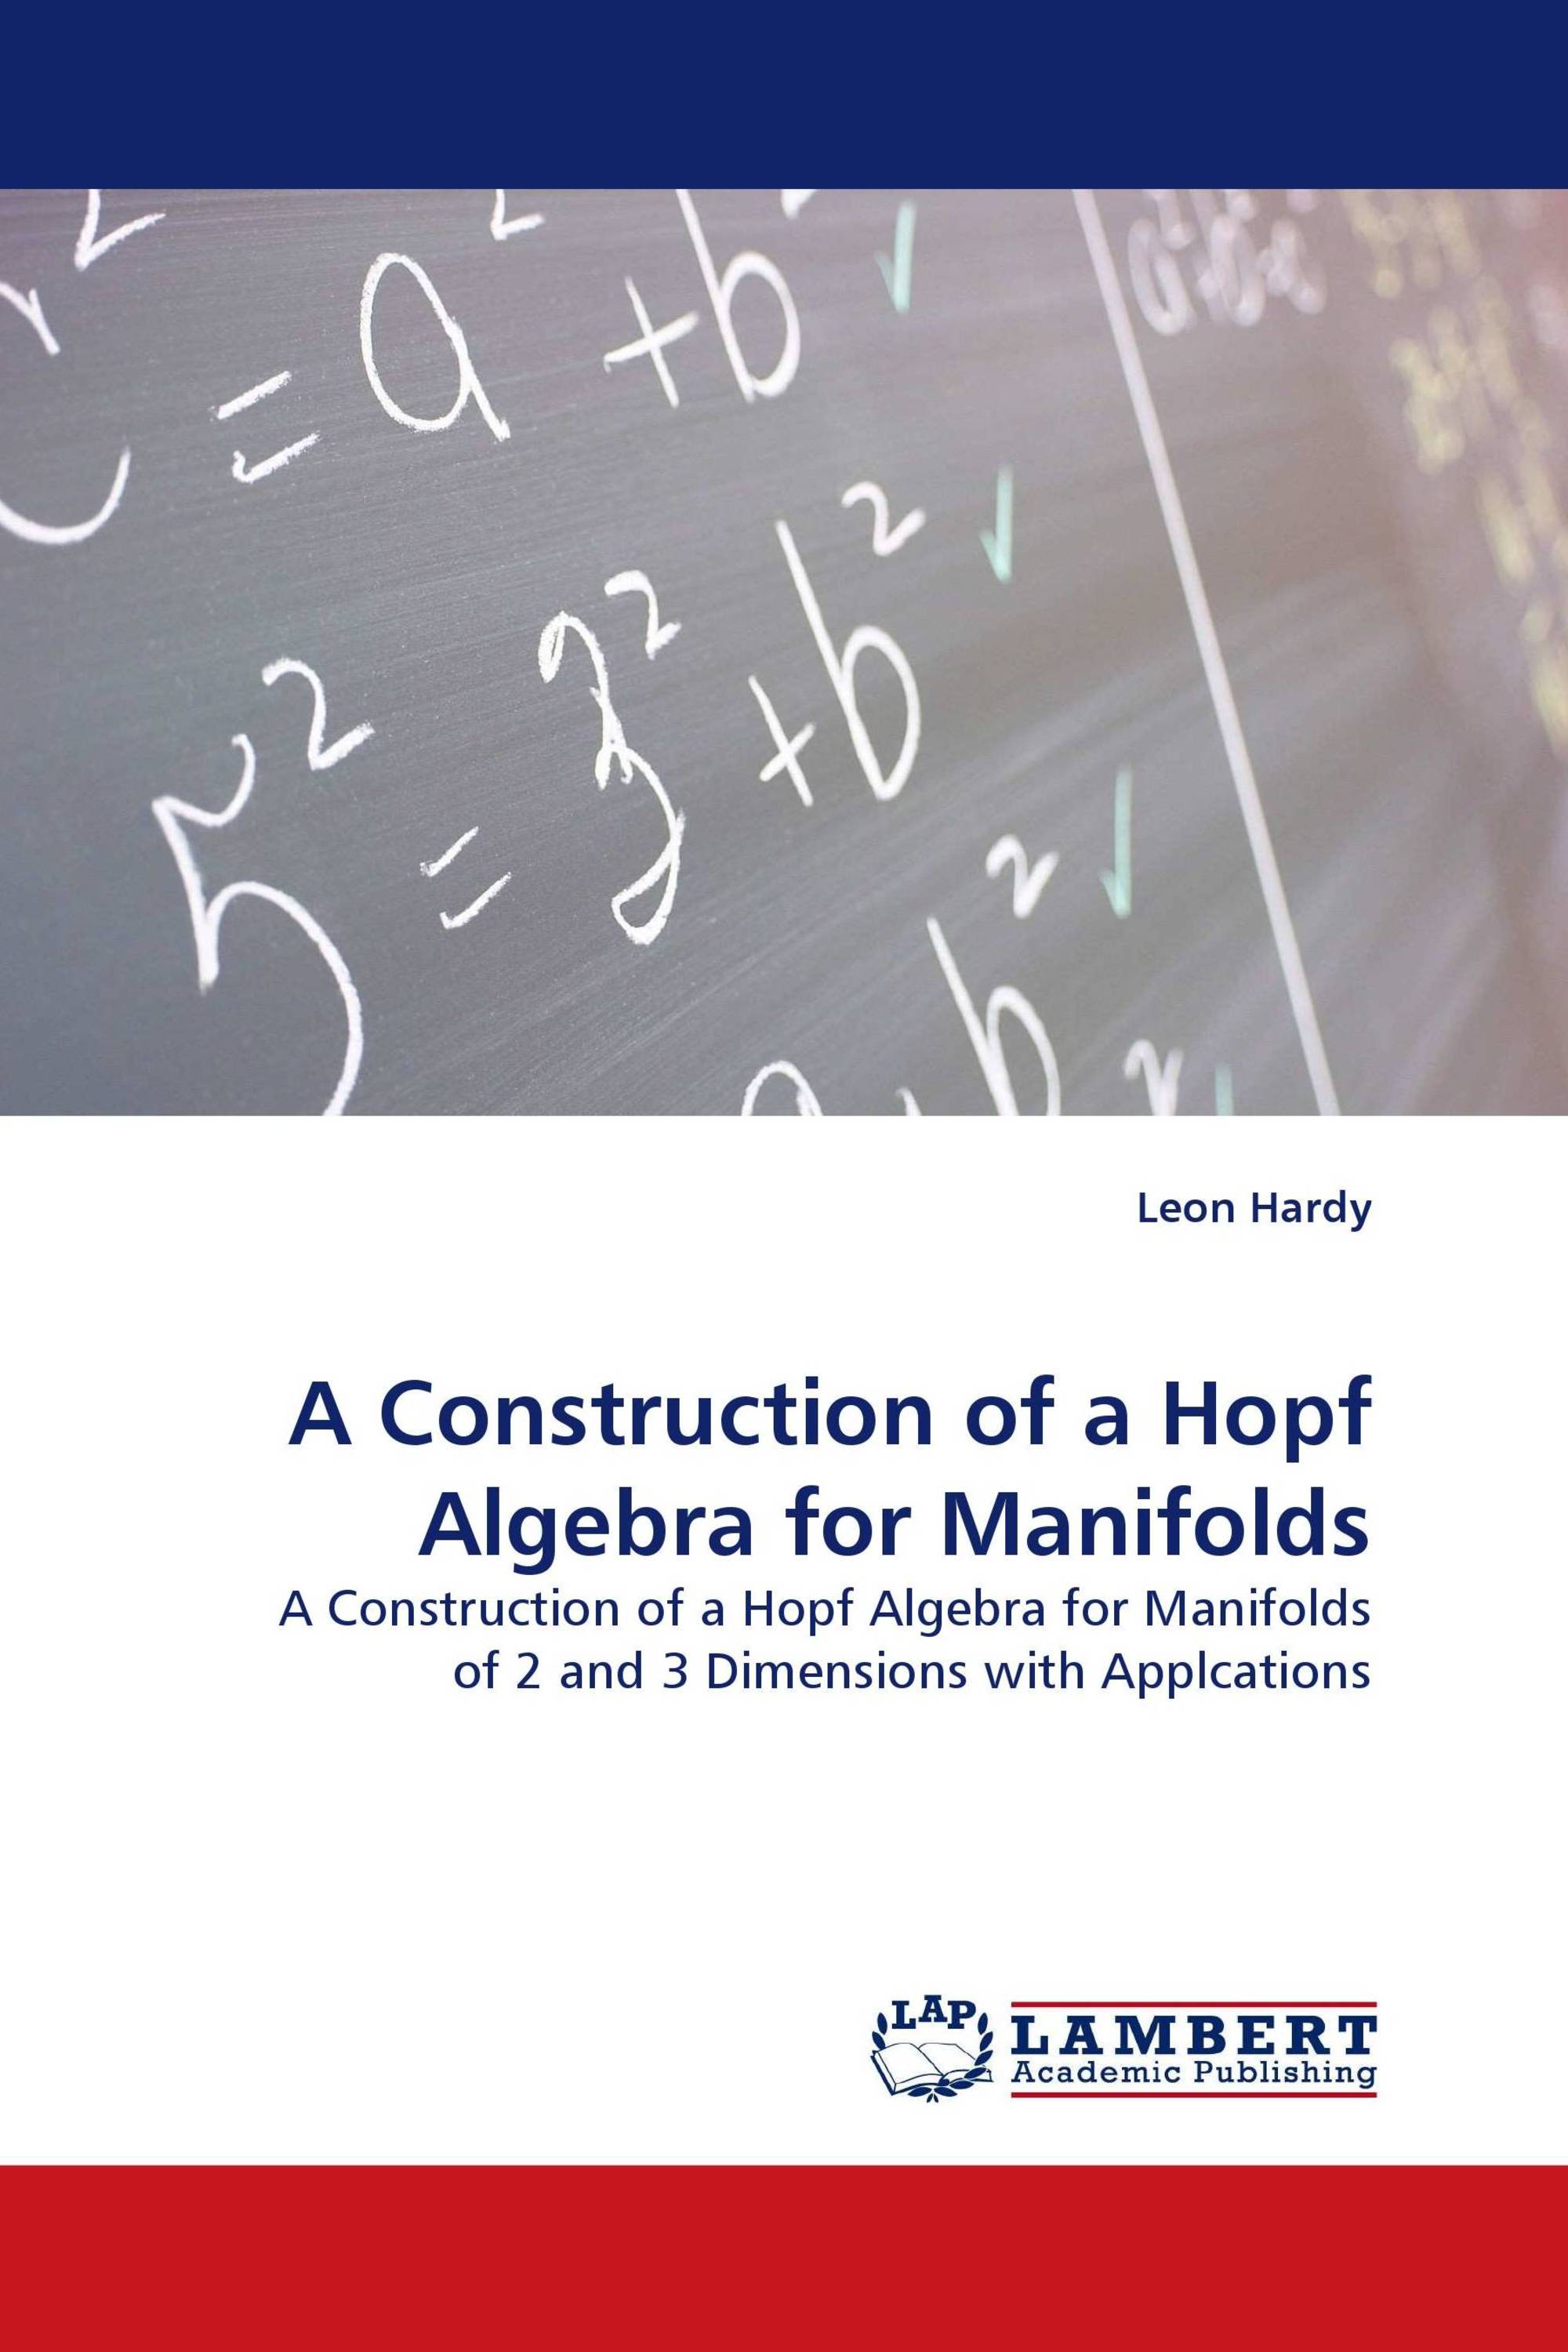 A Construction of a Hopf Algebra for Manifolds